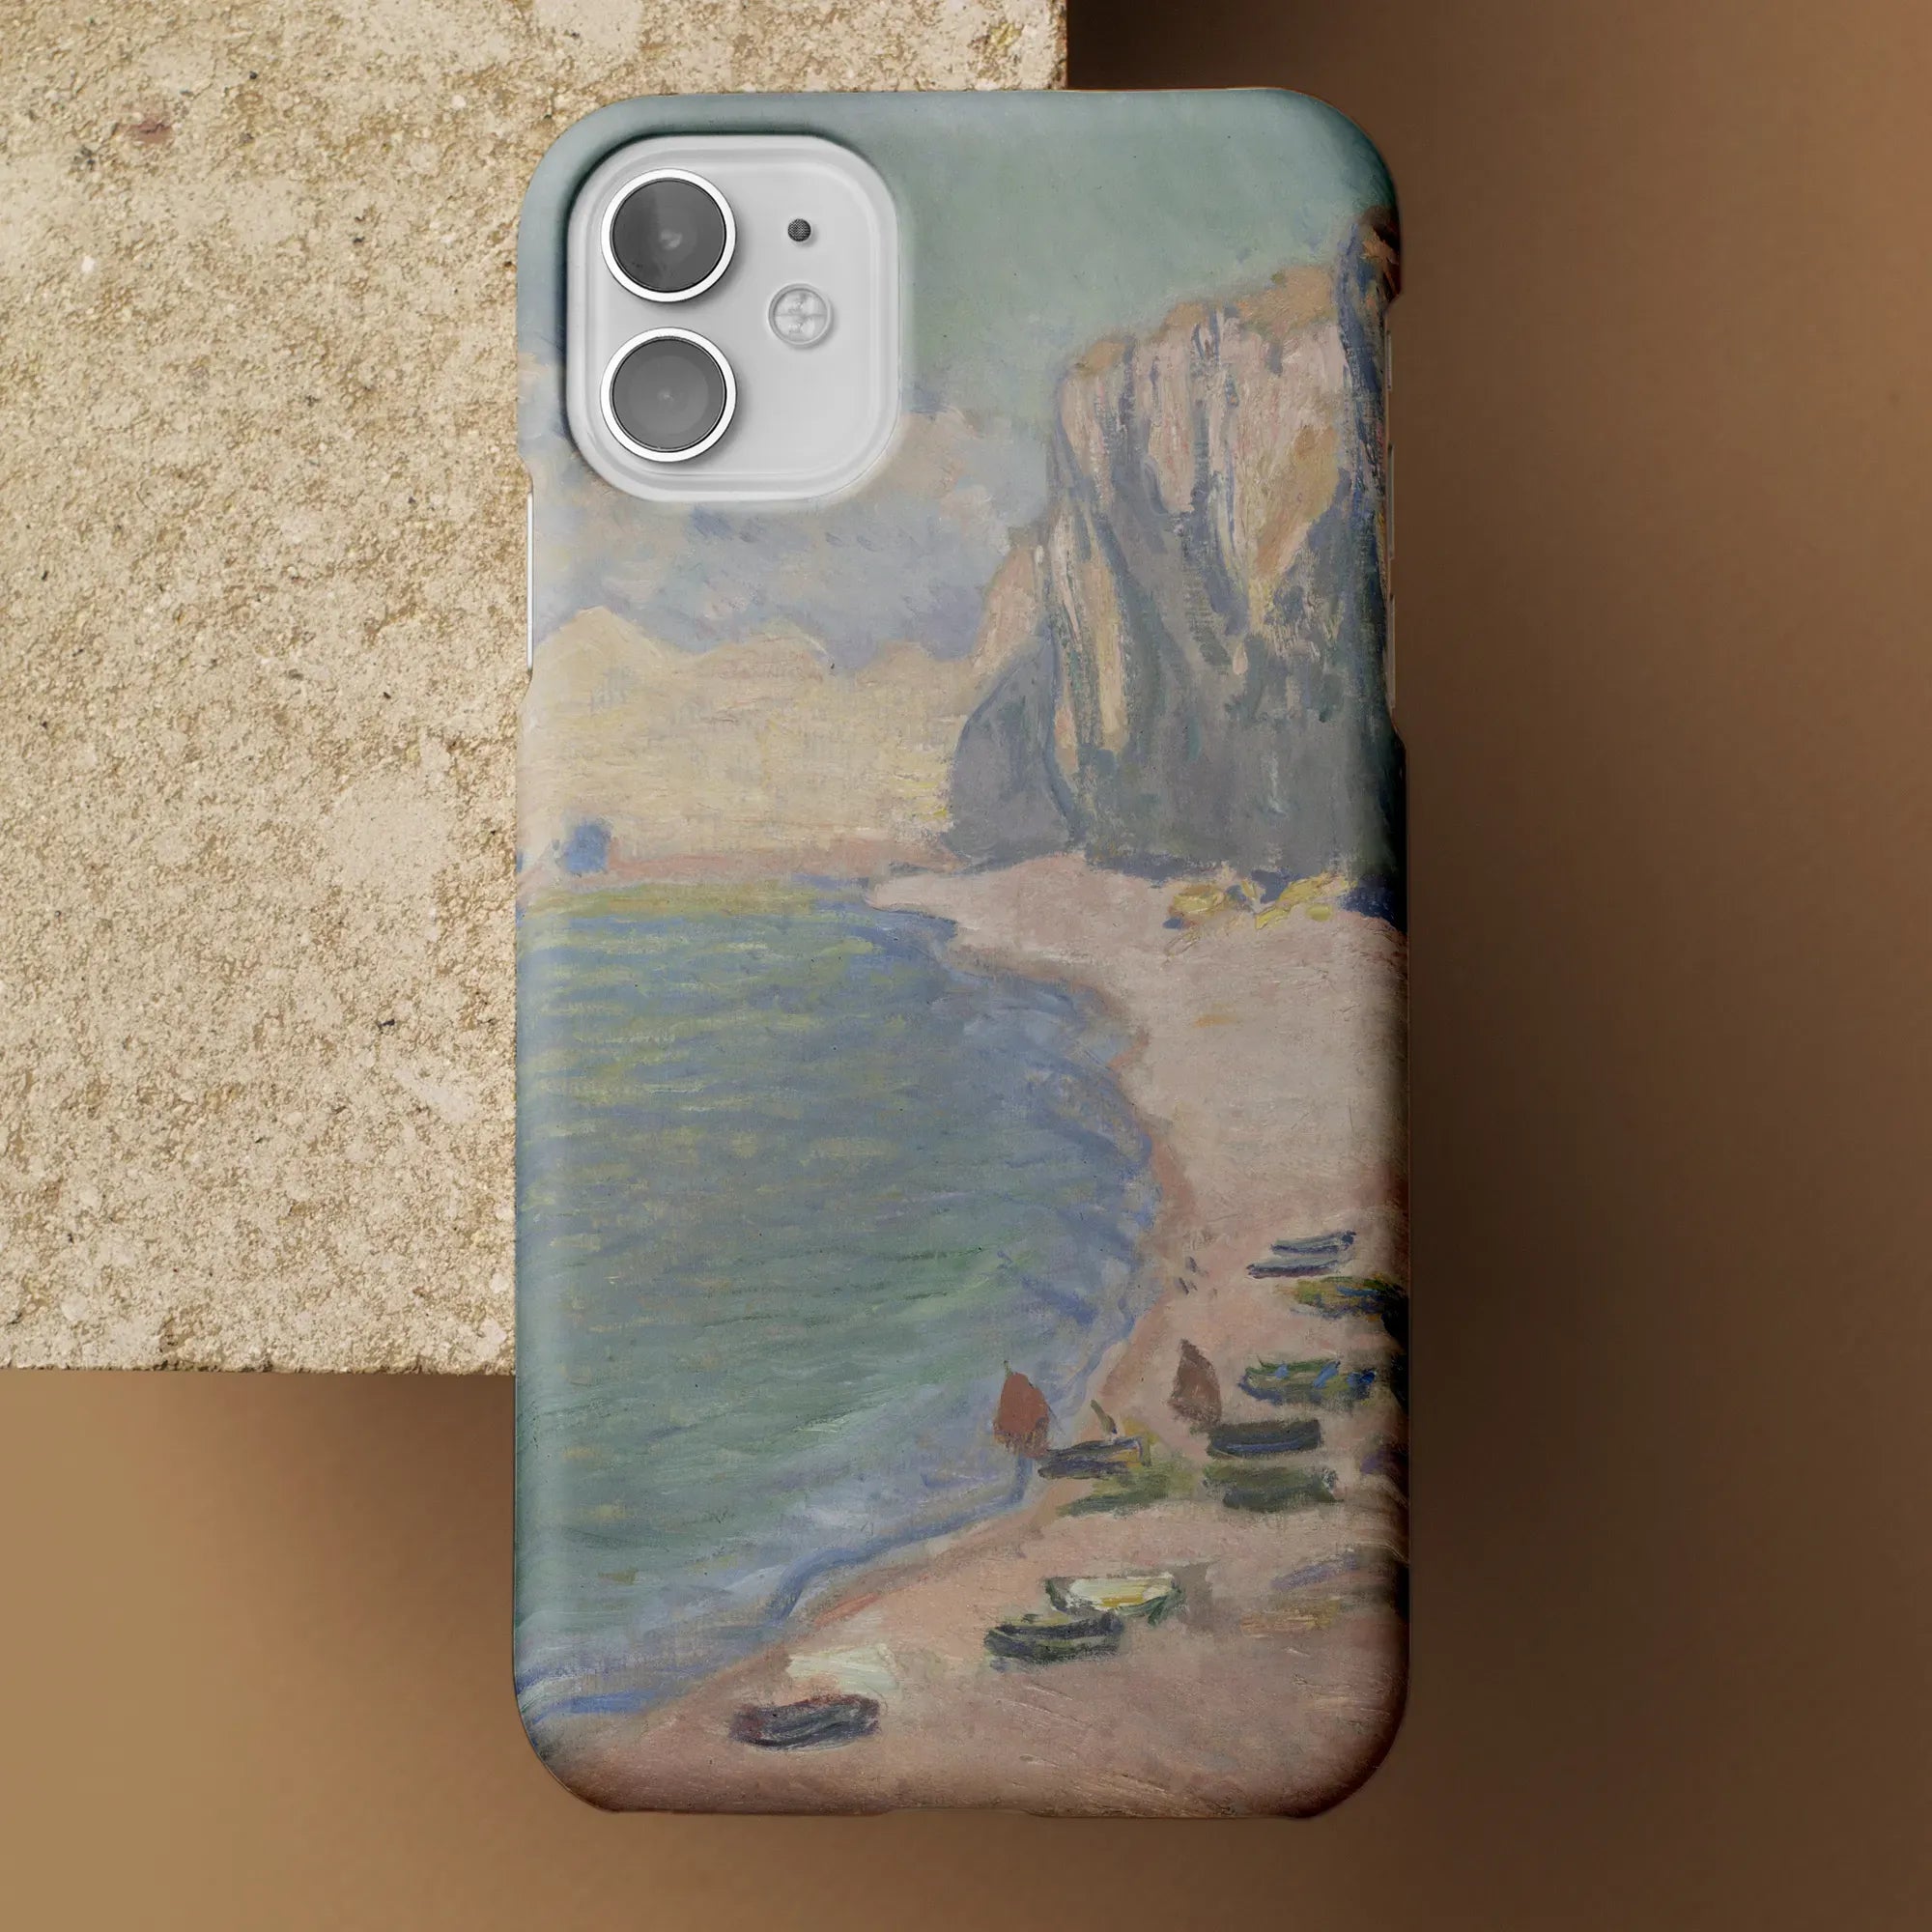 étretat - Impressionist Art Phone Case - Claude Monet - Mobile Phone Cases - Aesthetic Art